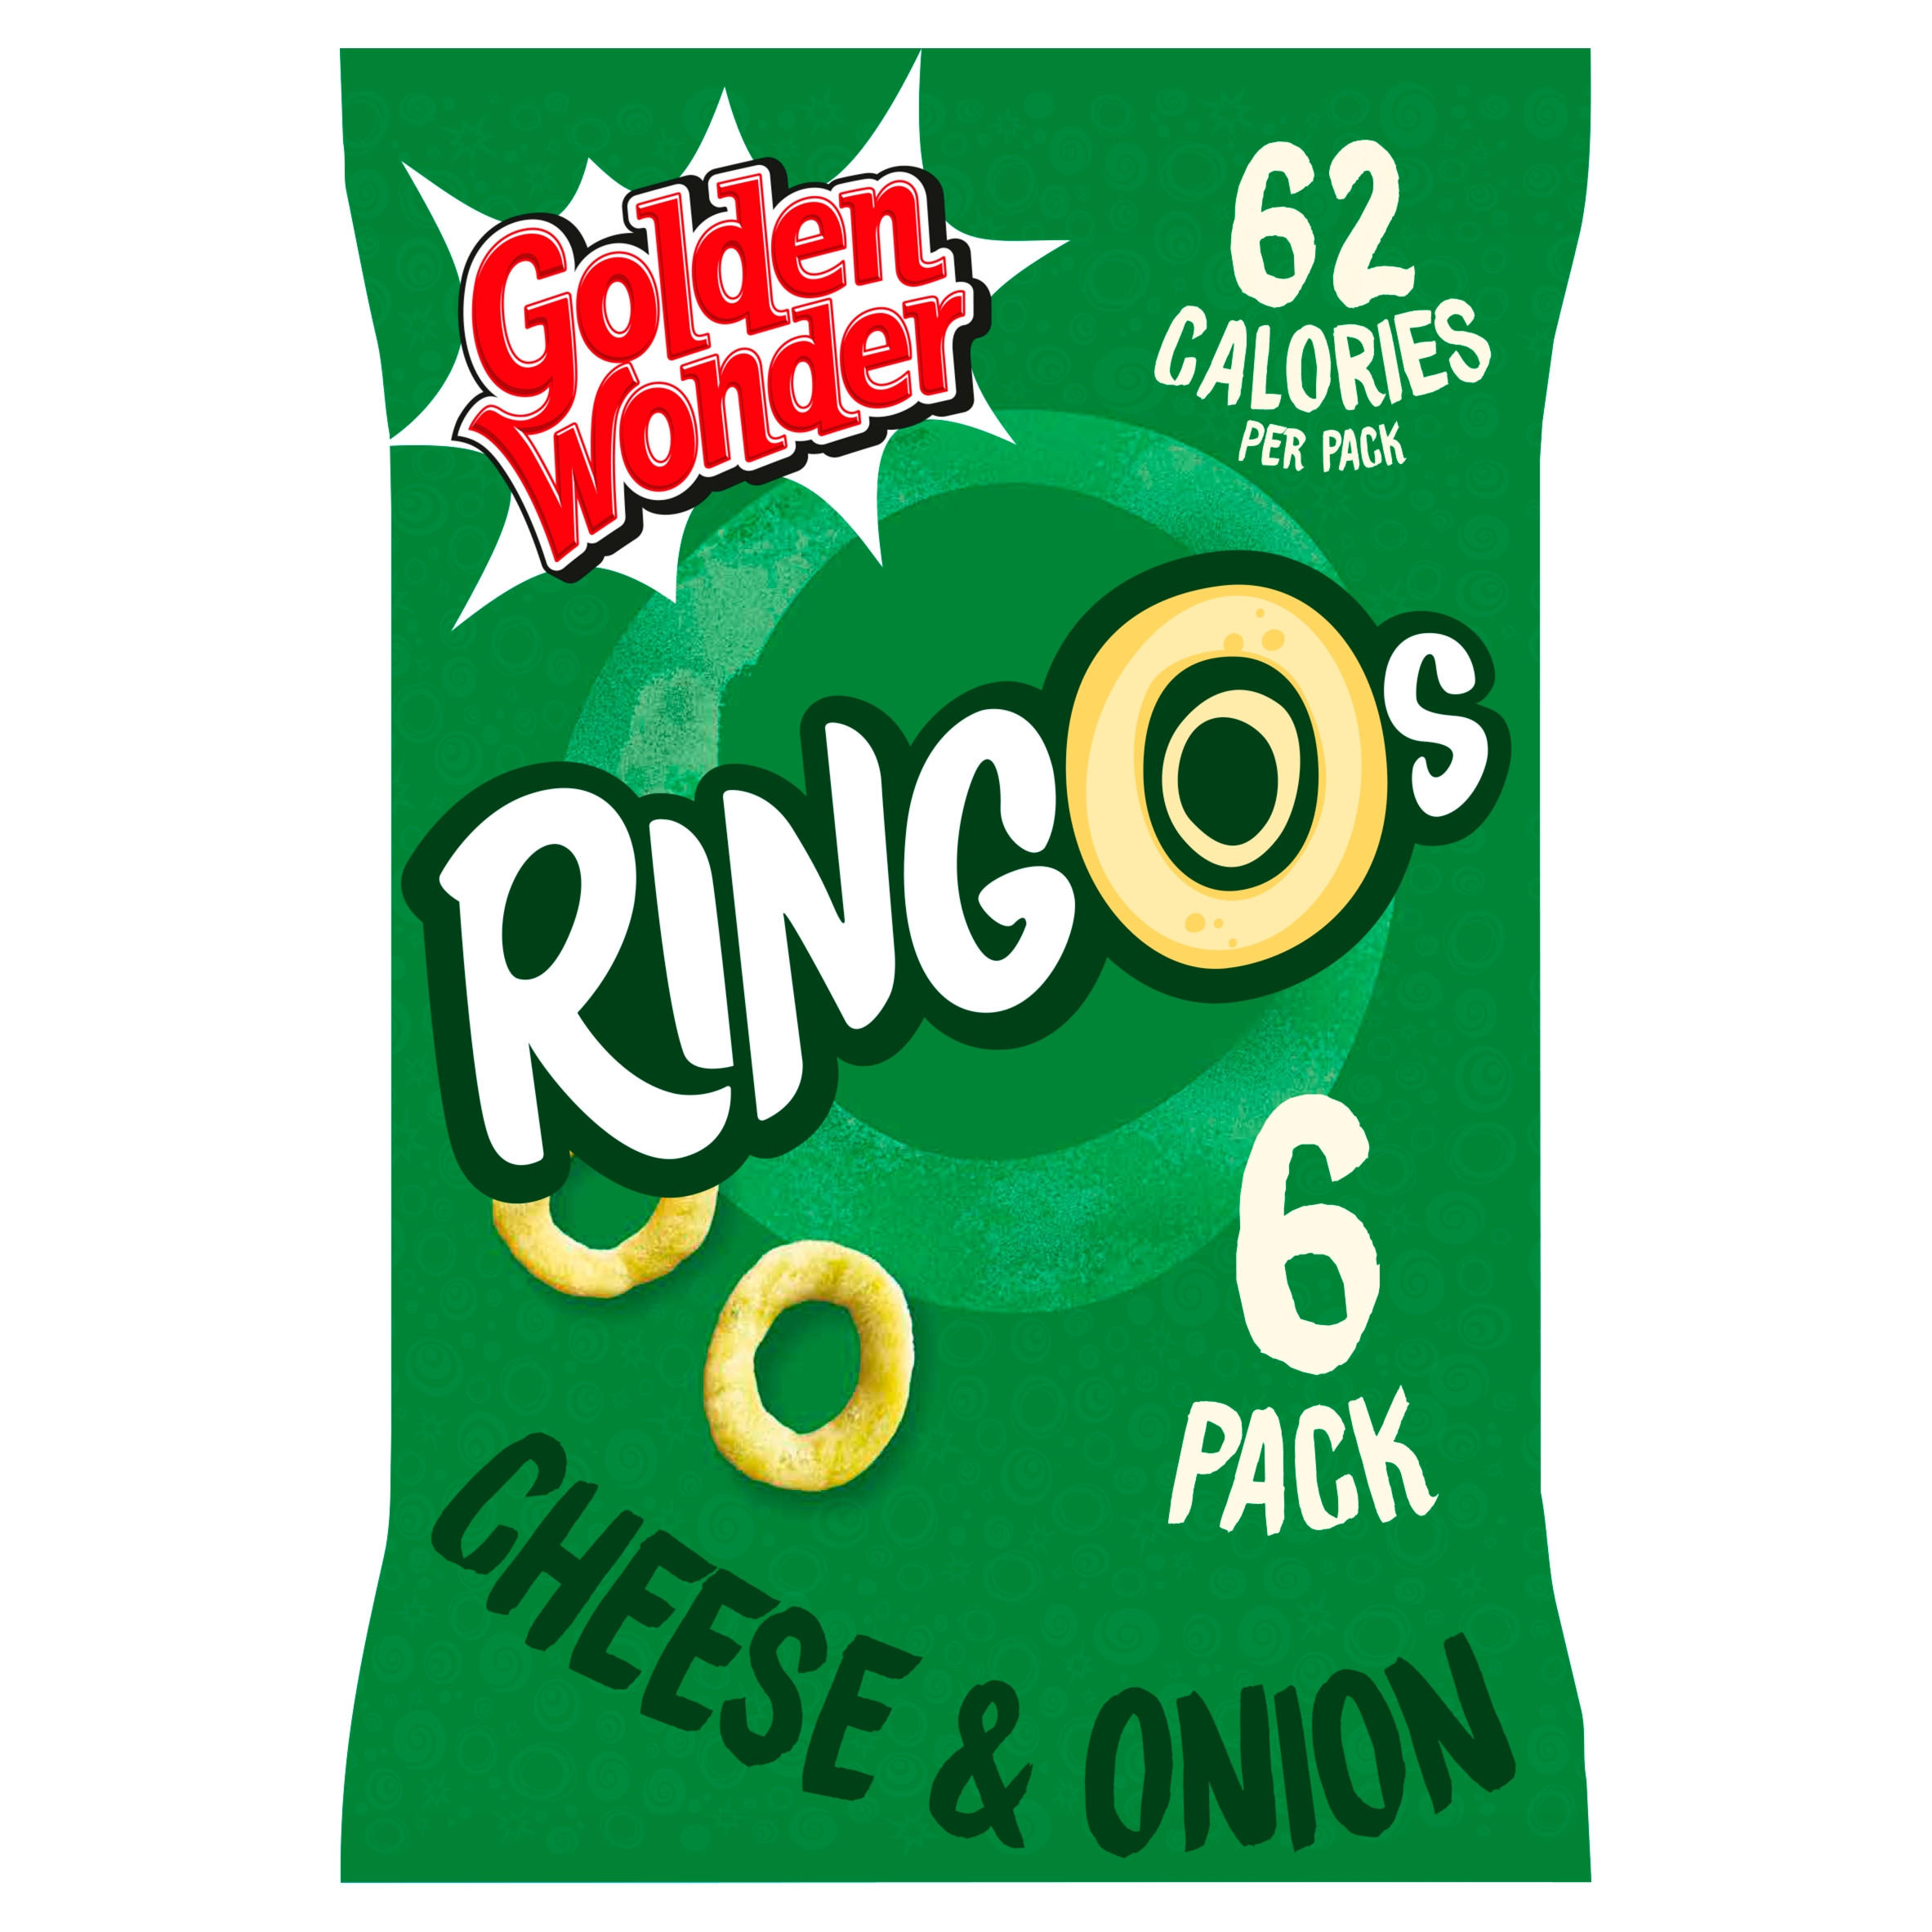 Onion Rings - Oishi